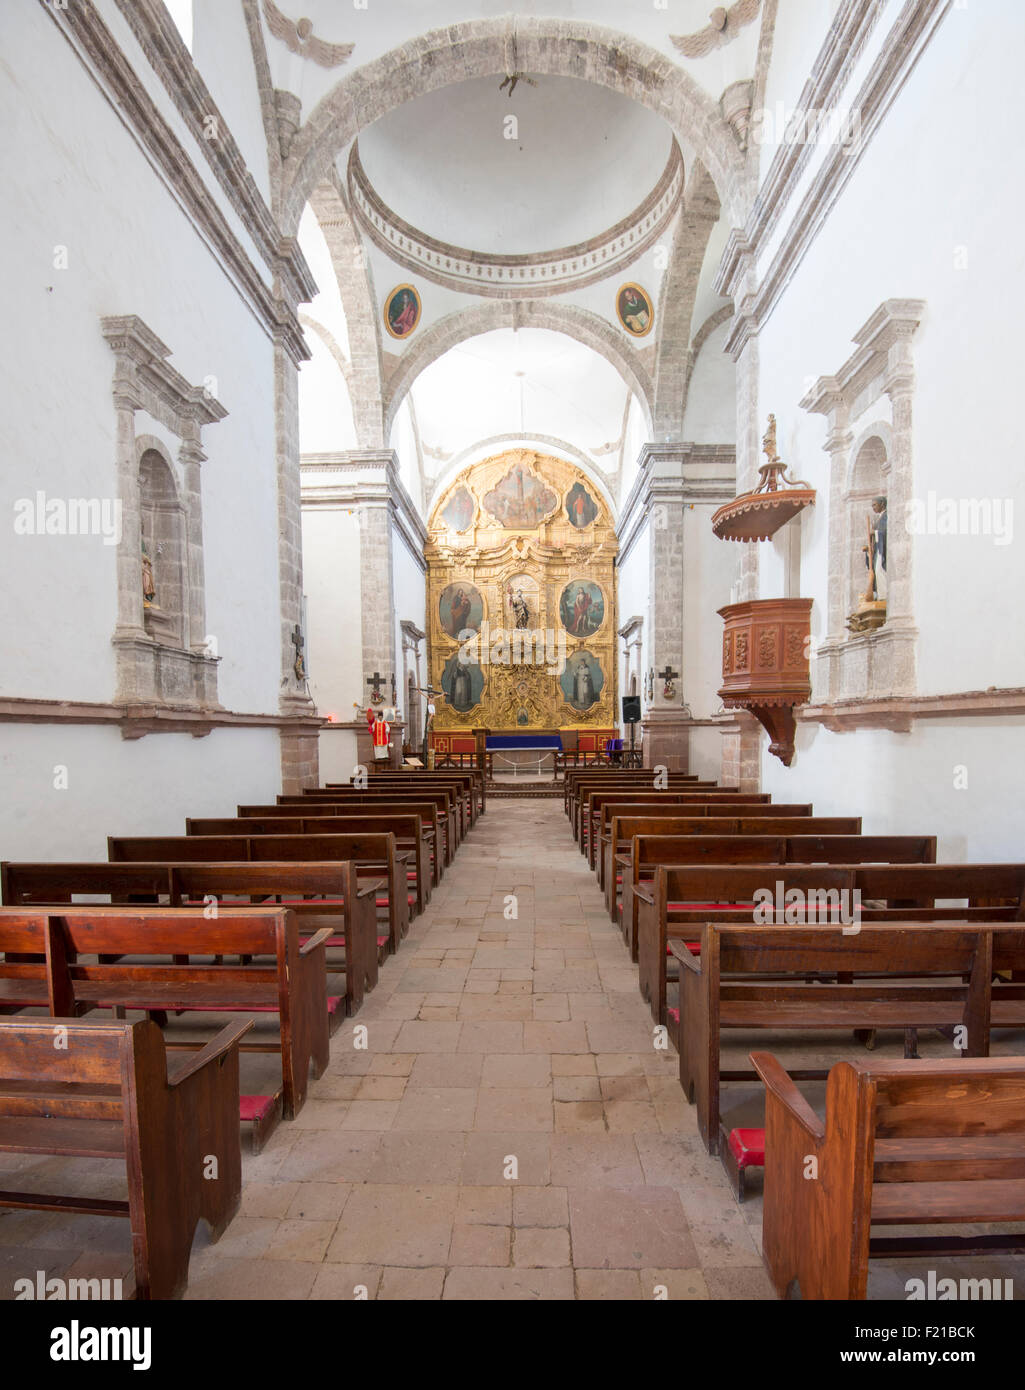 San ignacio church hi-res stock photography and images - Alamy